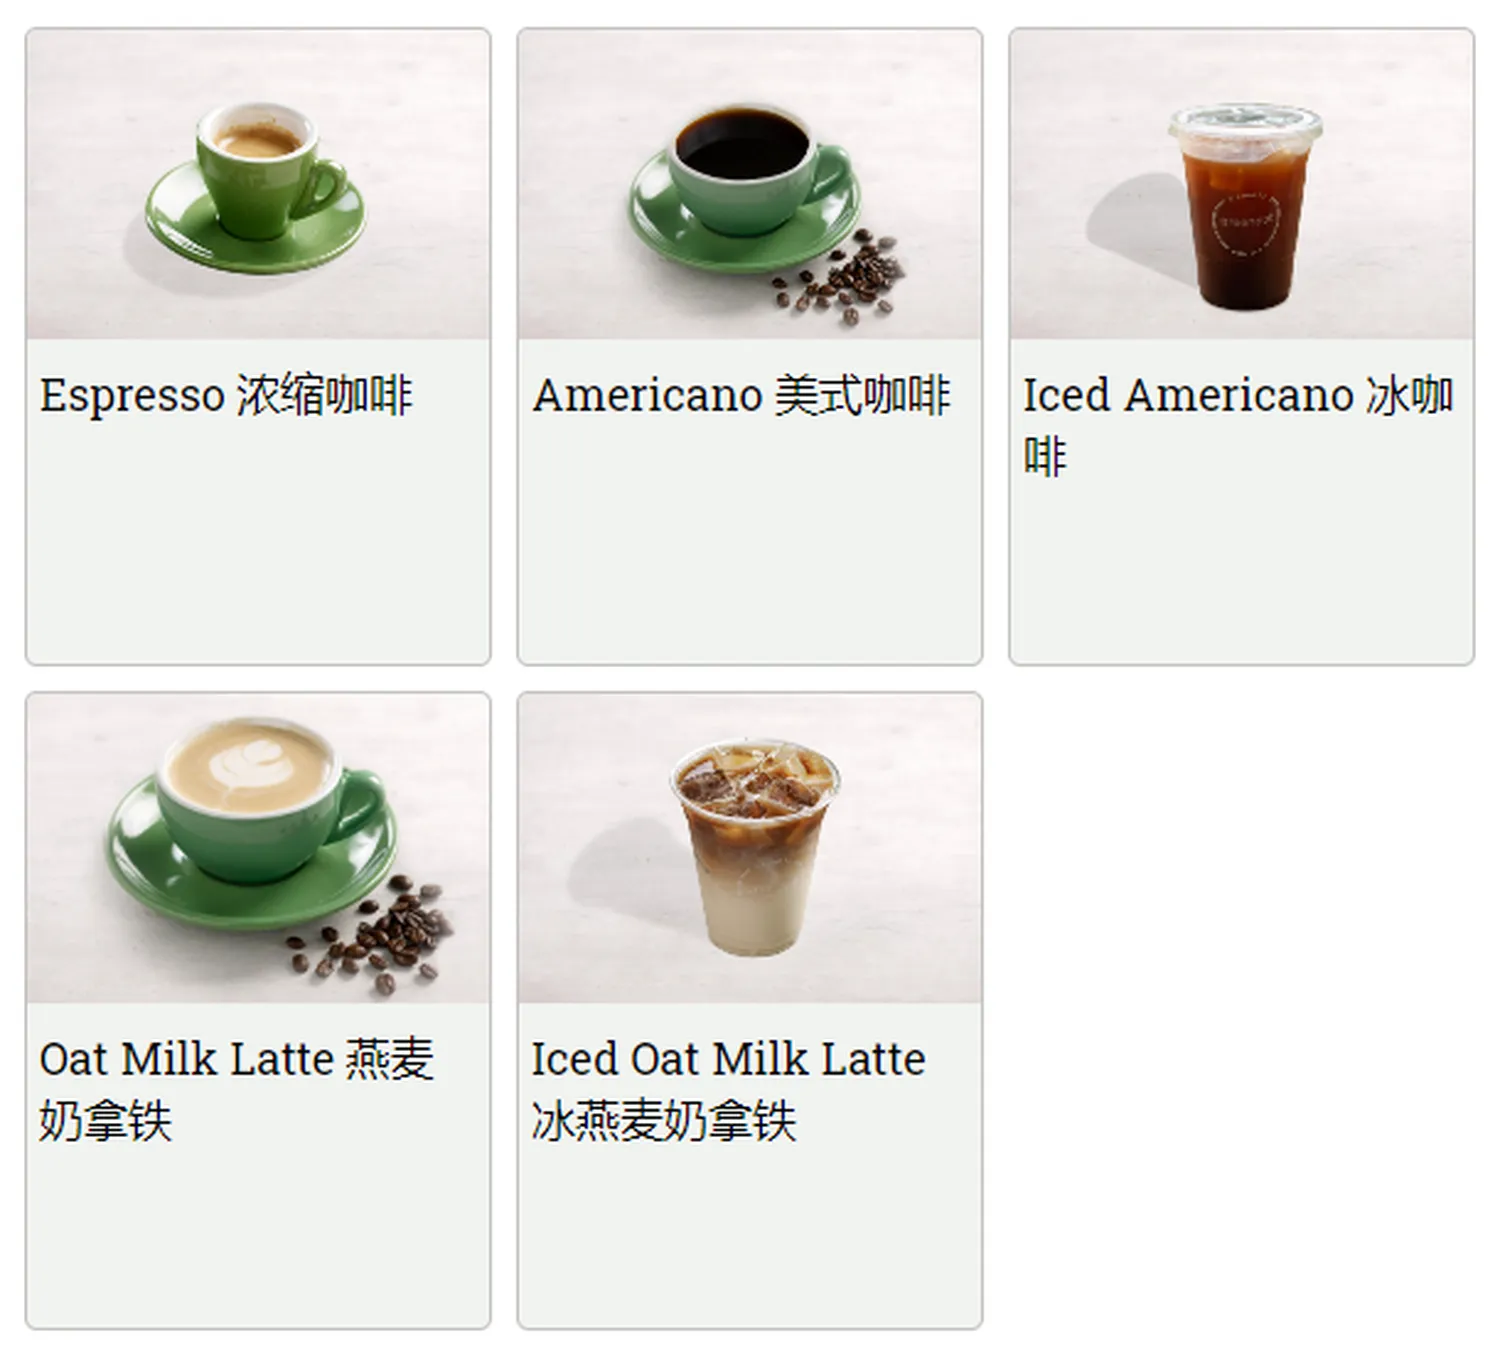 greendot menu singapore coffe specialty brew